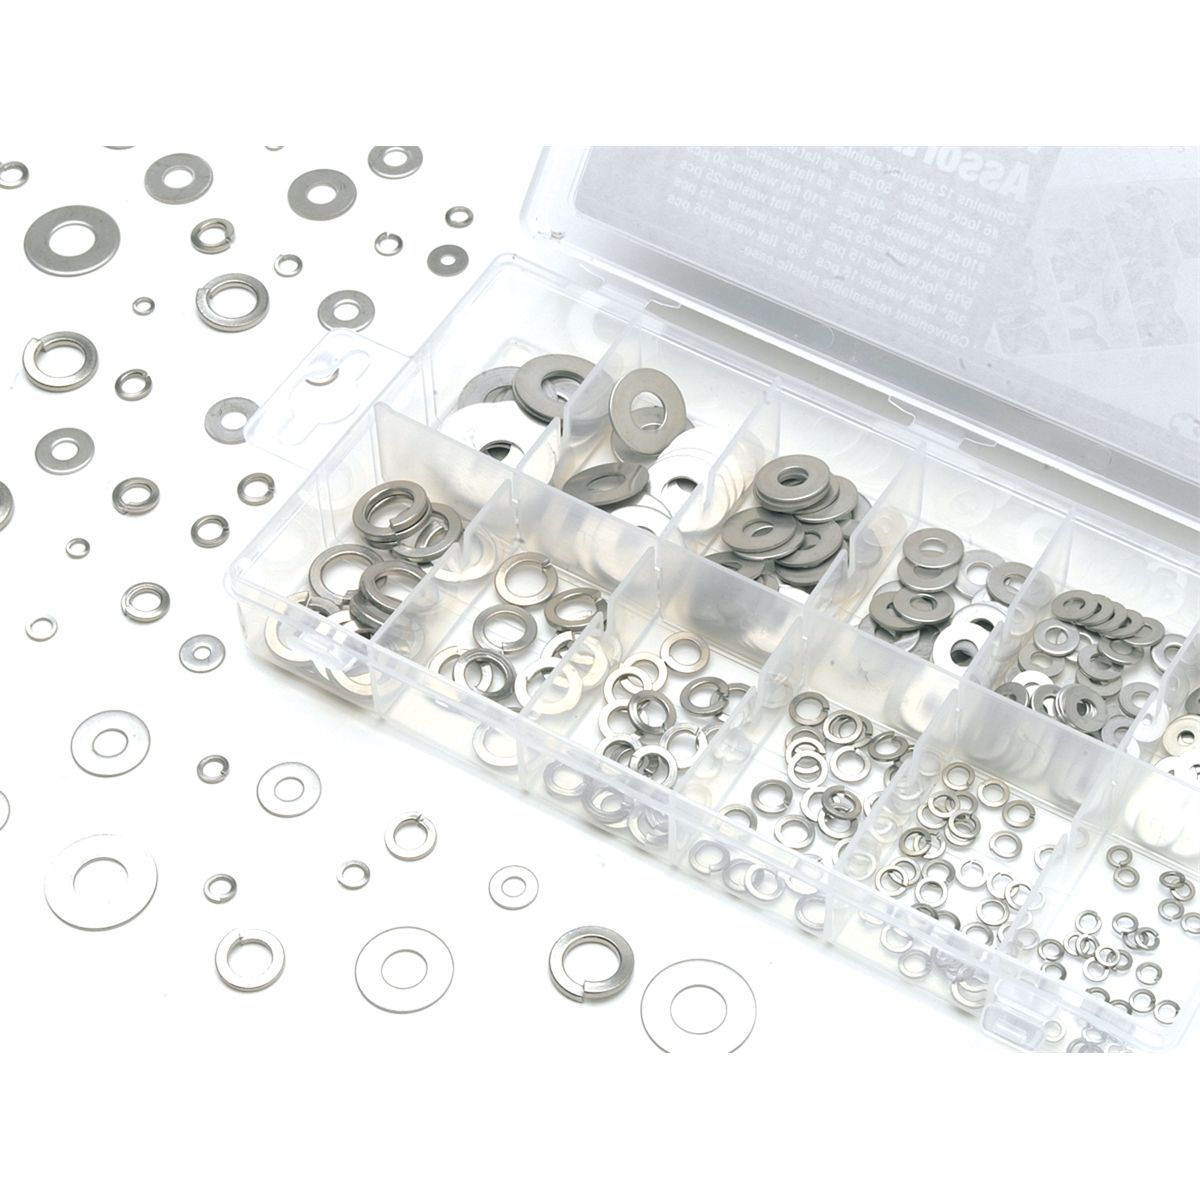 Lock and Flat Washer Hardware Kit - 350-Pc